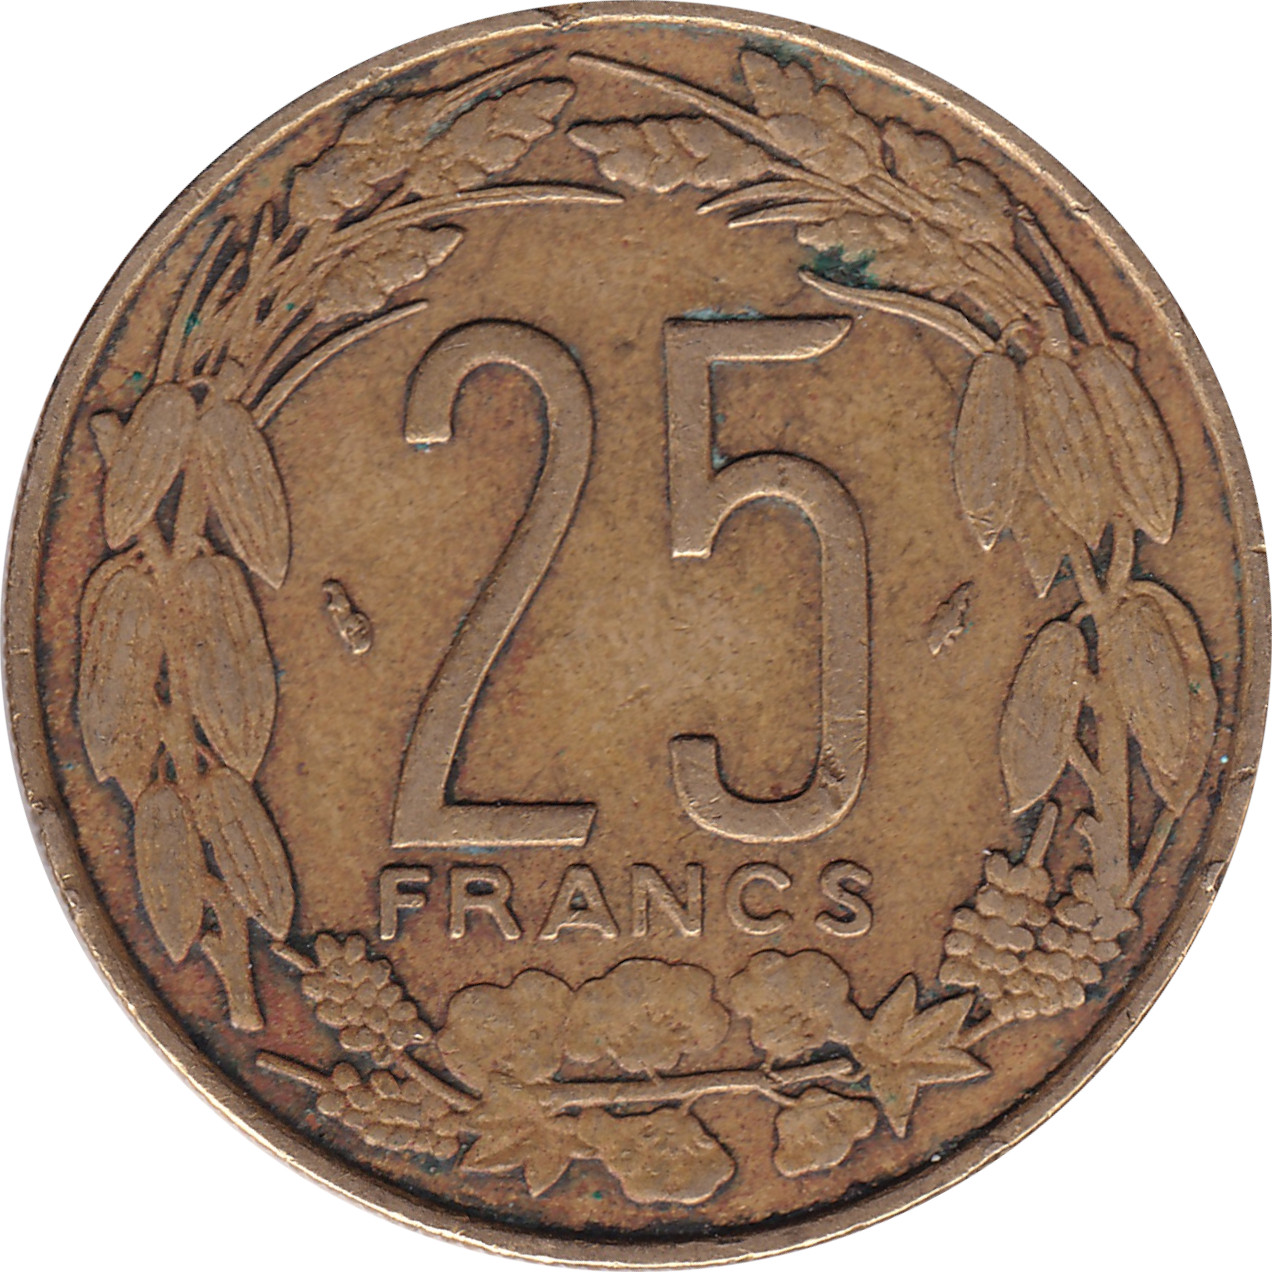 25 francs - Antilopes